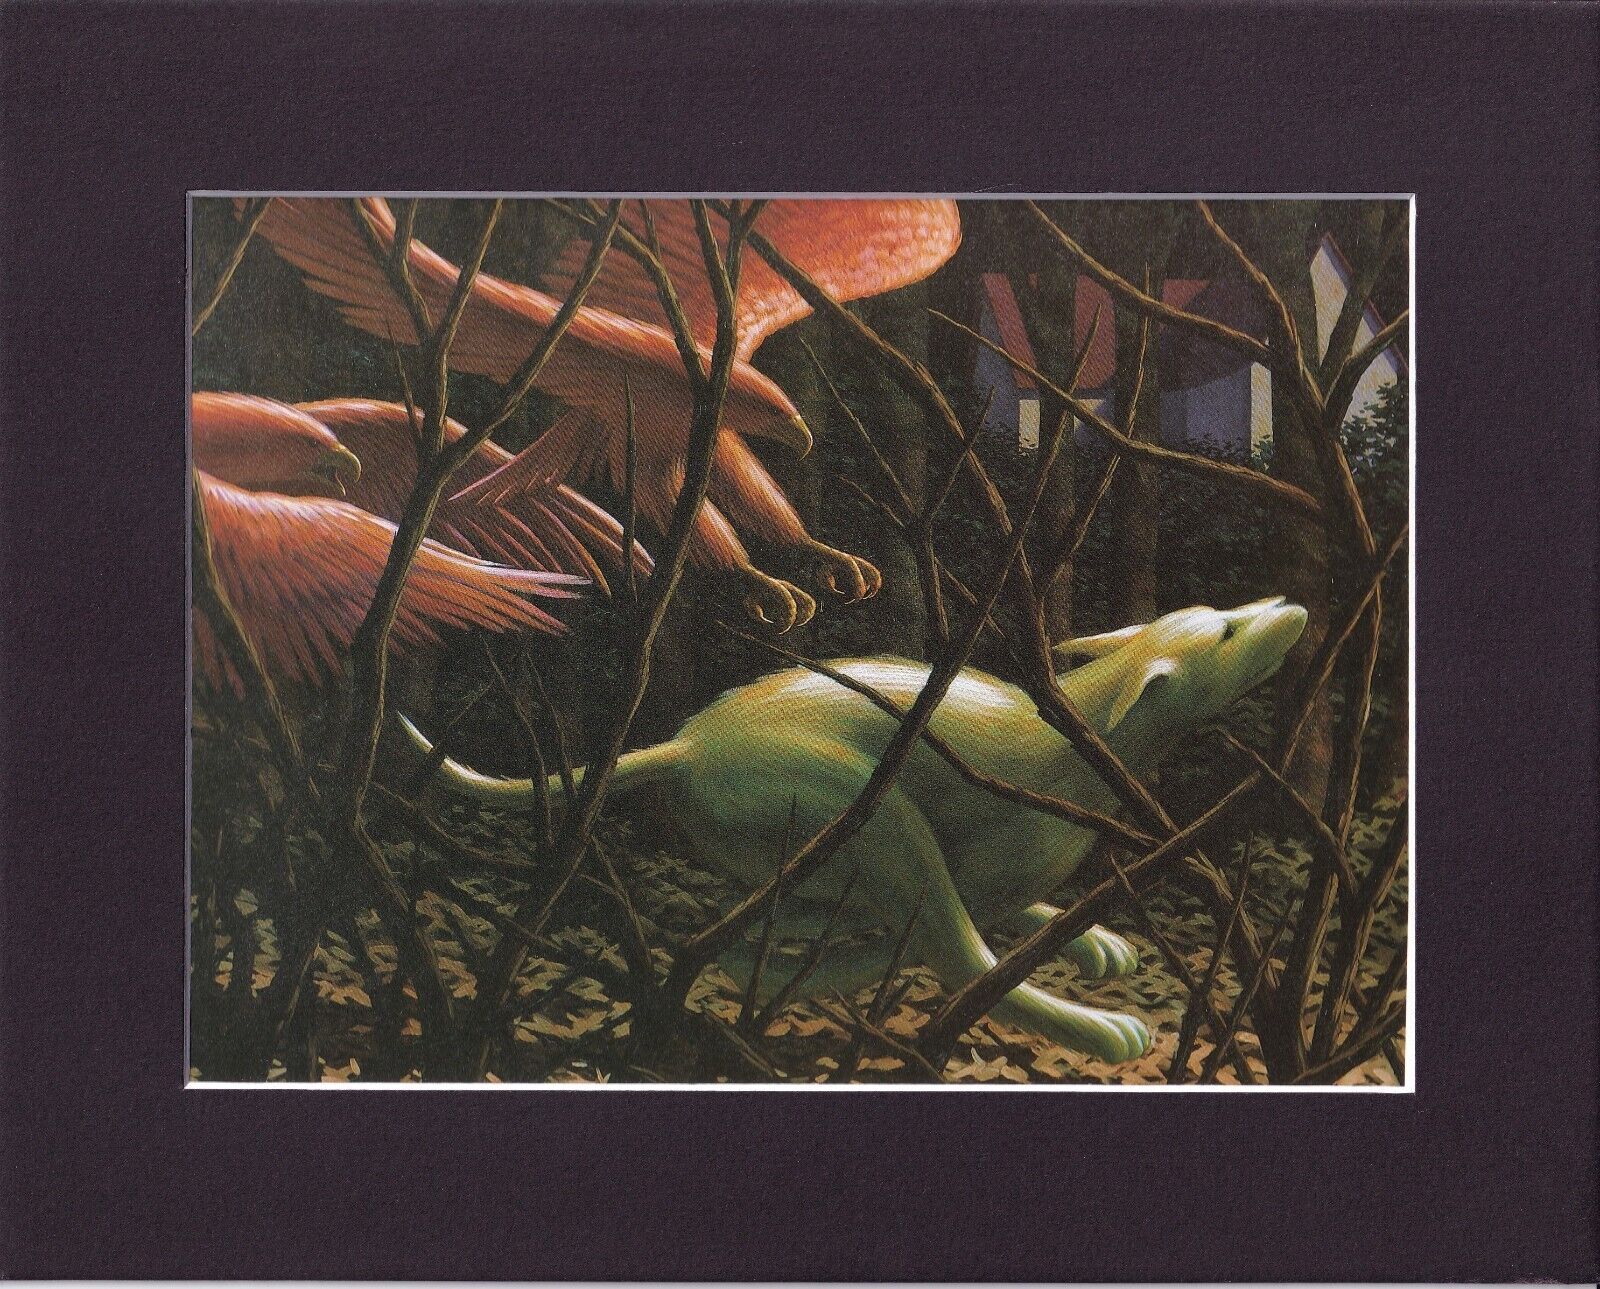 8X10 Matted Print Art Classic Picture: Leonard Koscianski, 1983 Expulsion